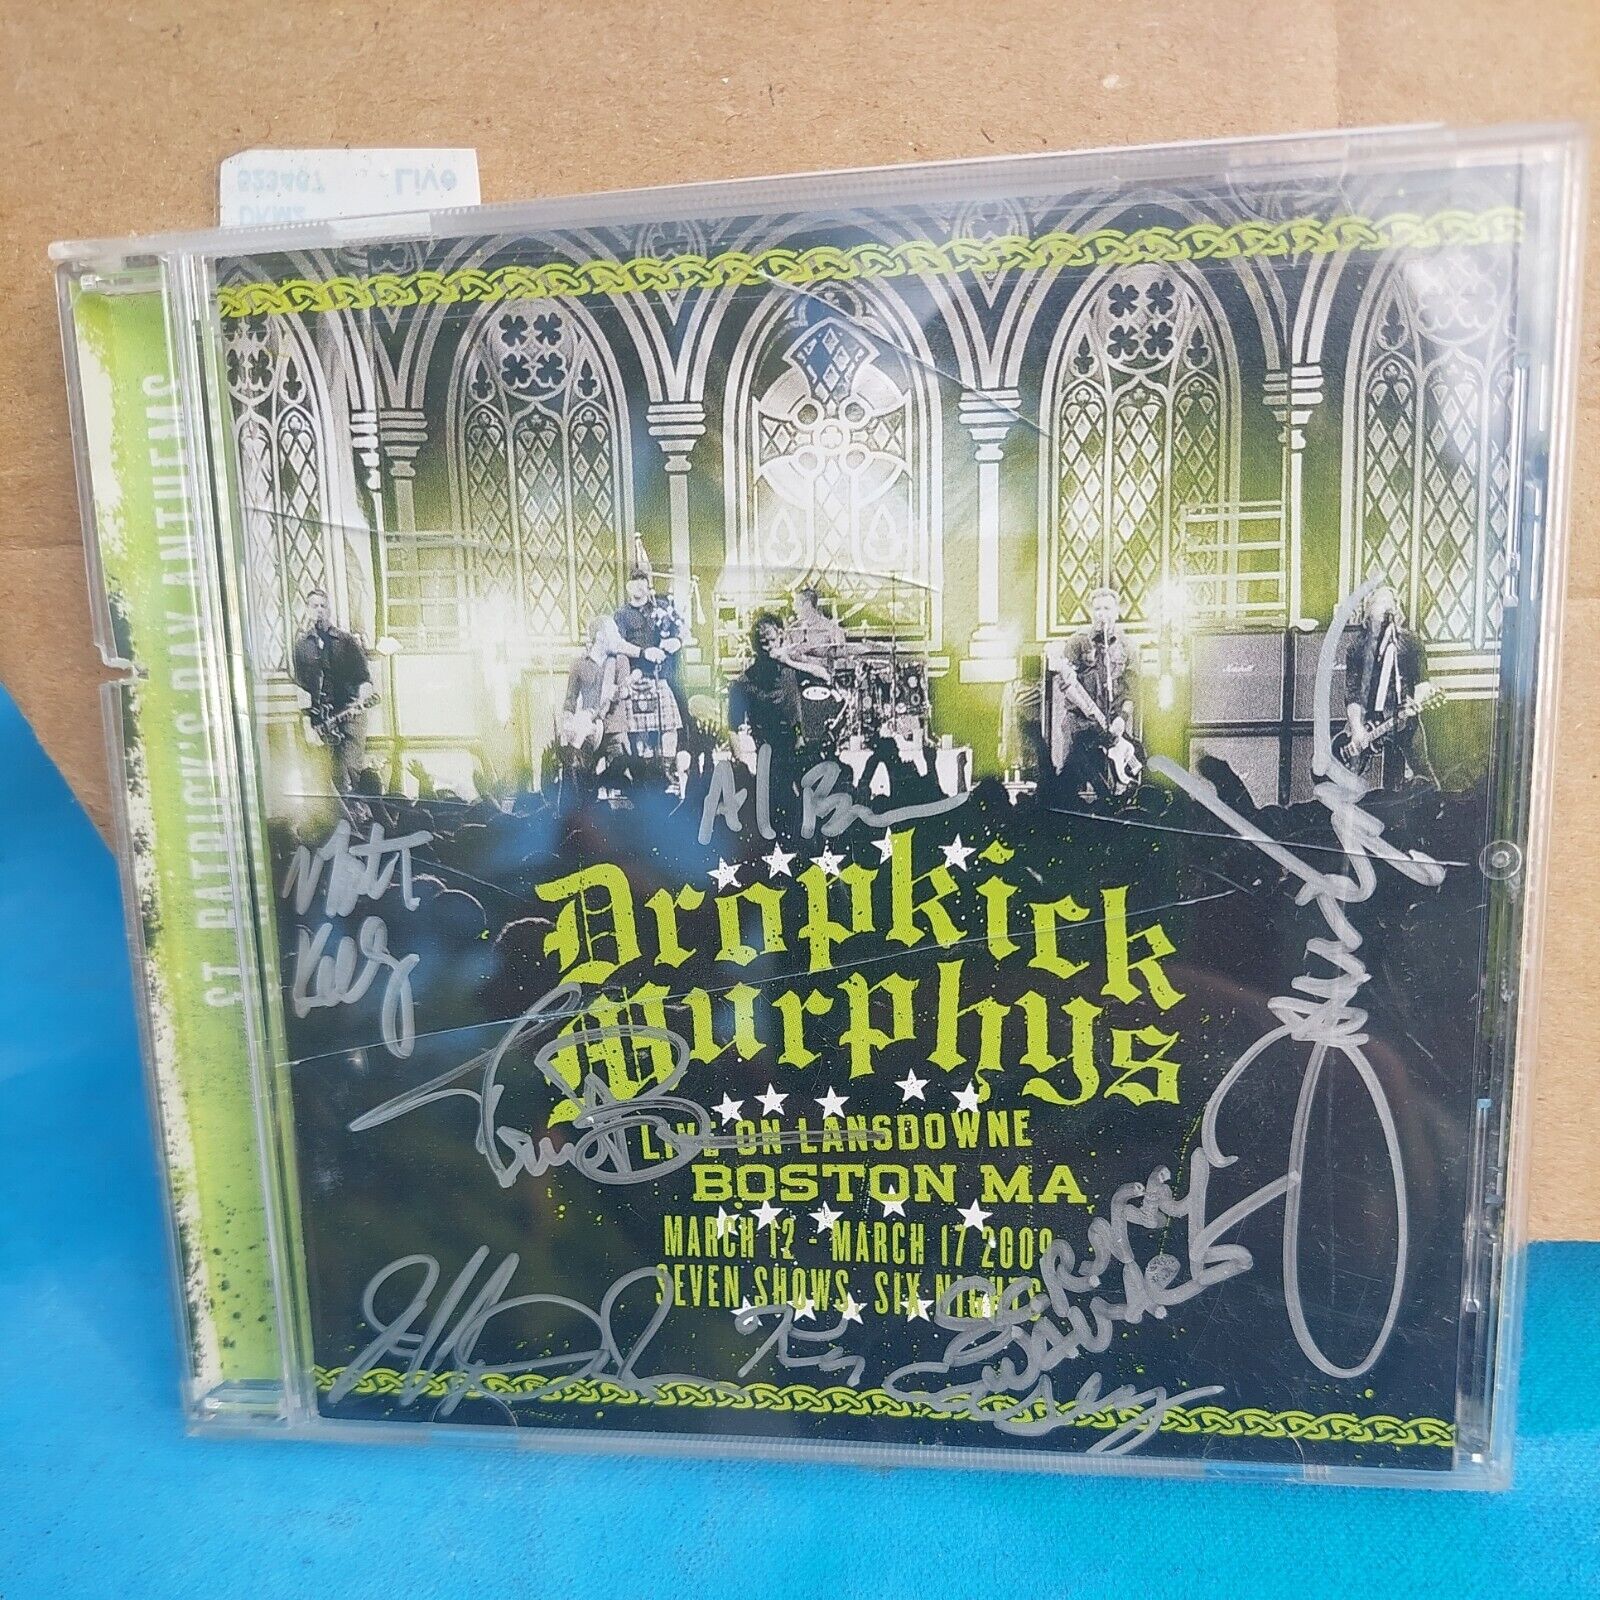 AUTOGRAPHED Dropkick Murphys LIVE ON LANSDOWNE BOSTON,MA CD signed by band